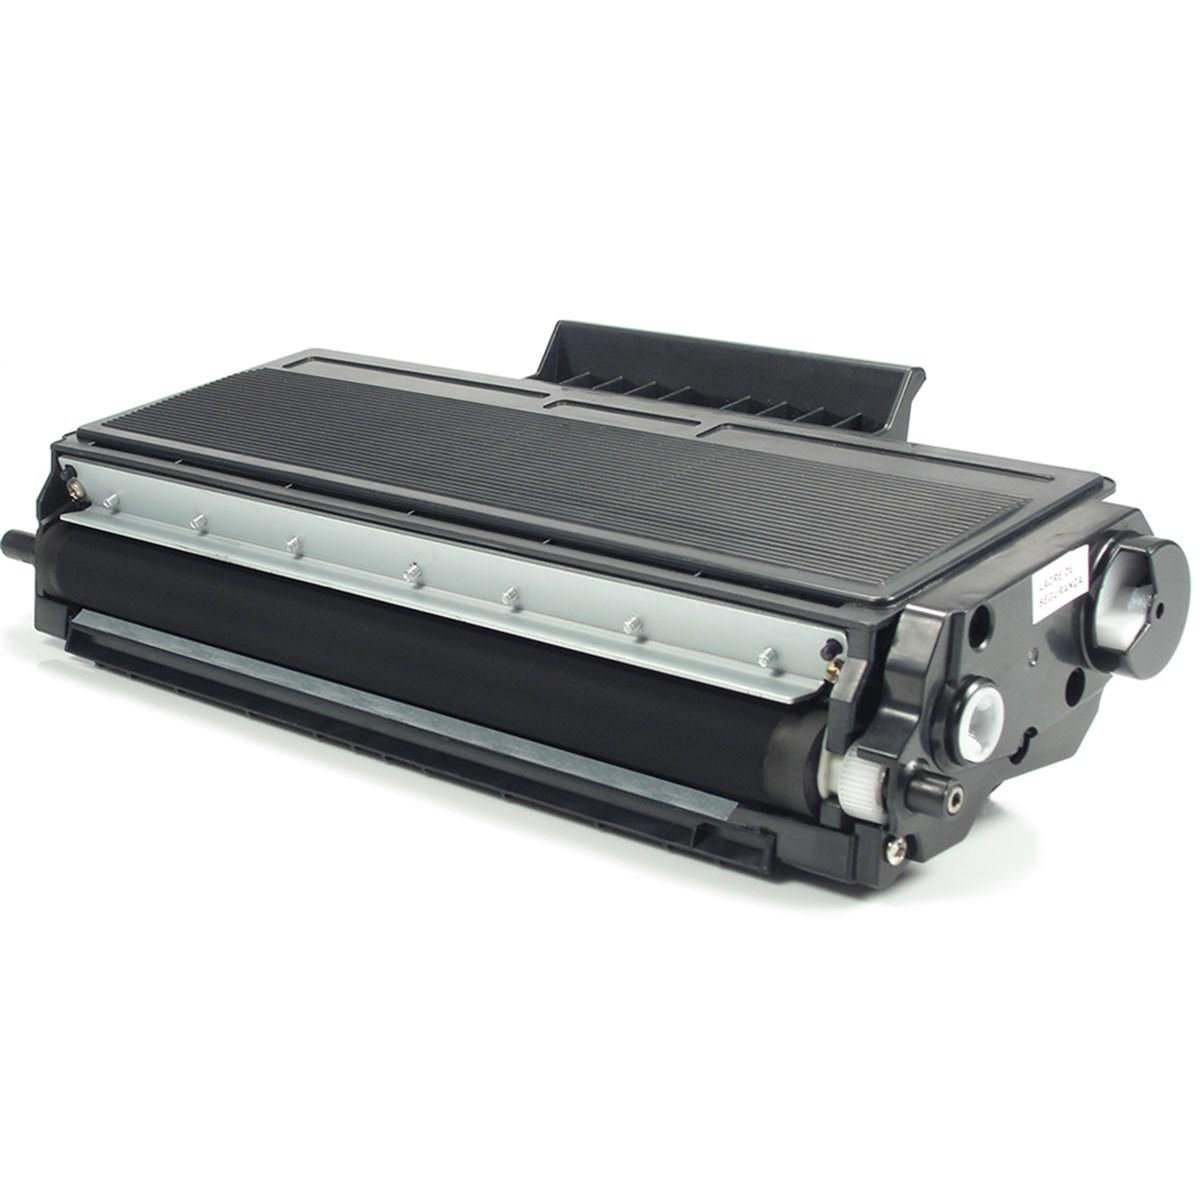 Cartus Toner Compatibil Brother TN3480 Laser Europrint, Black, 8000 pagini